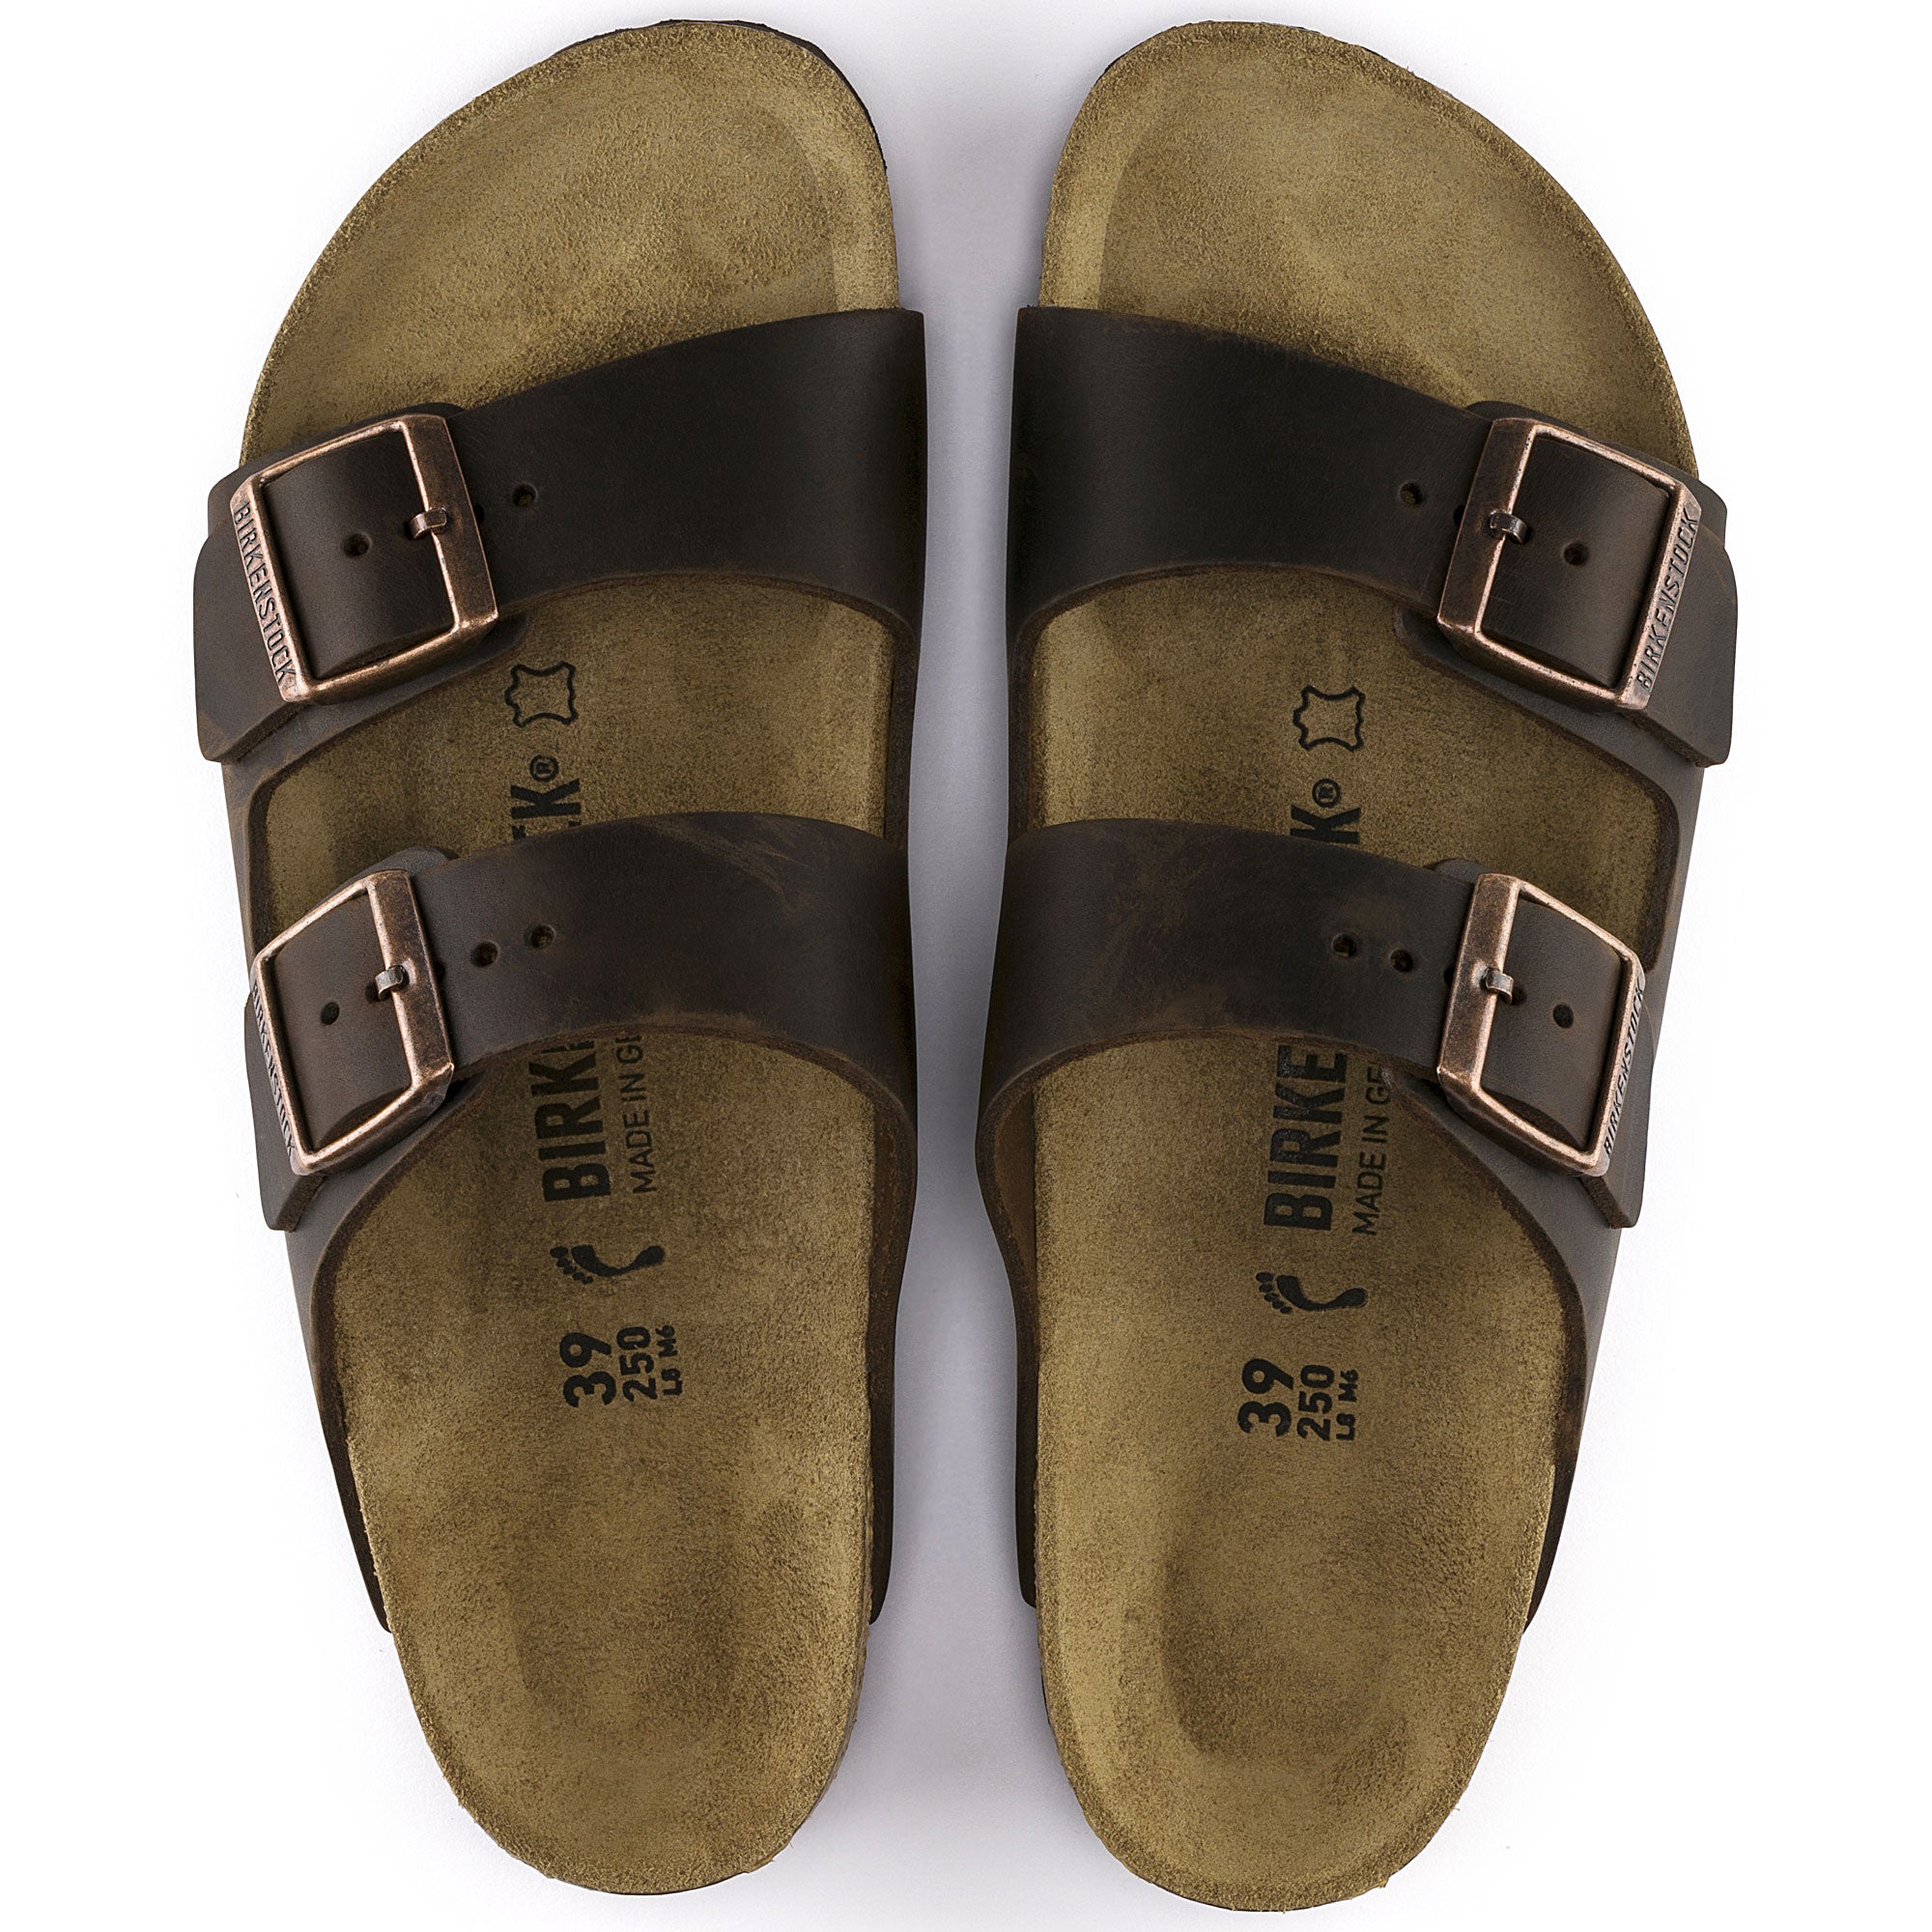 Birkenstock Women's Arizona Oiled Leather Narrow Sandals